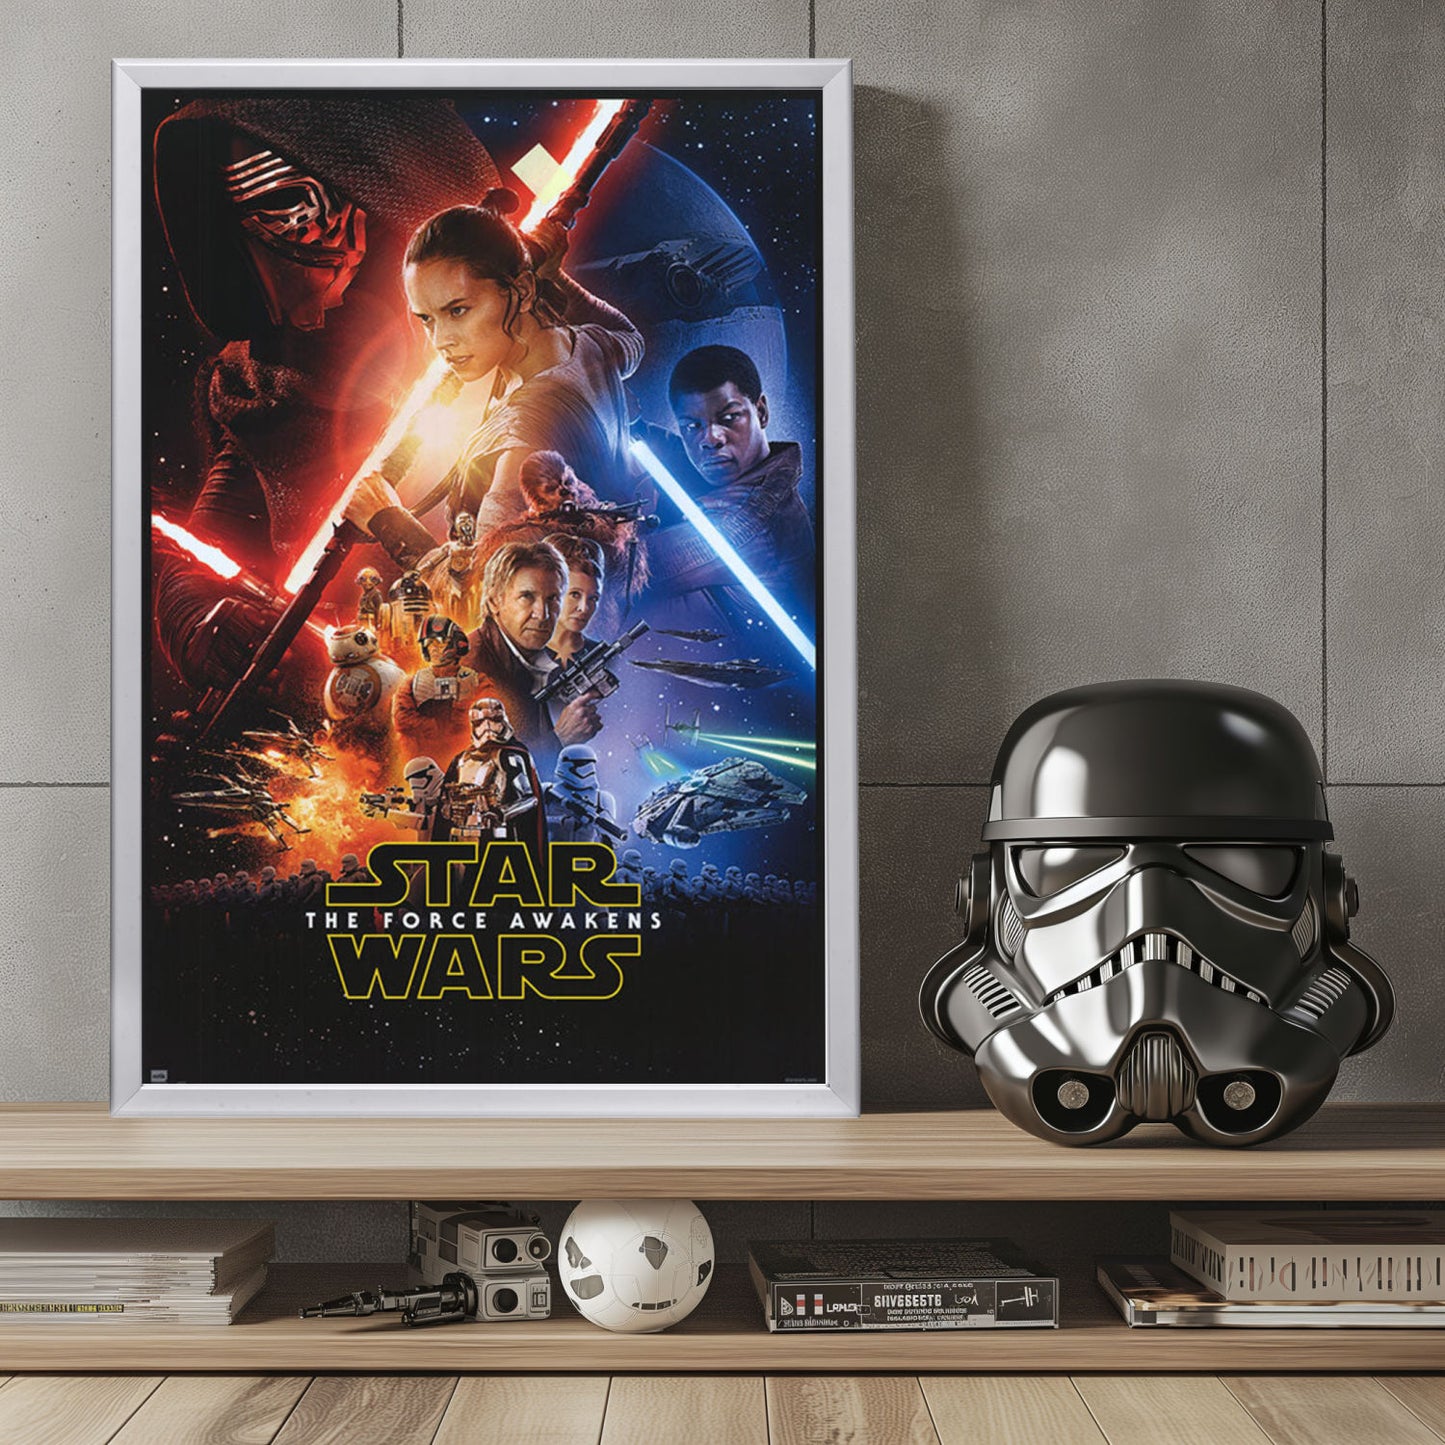 "Star Wars: Episode VII - The Force Awakens" (2015) Framed Movie Poster